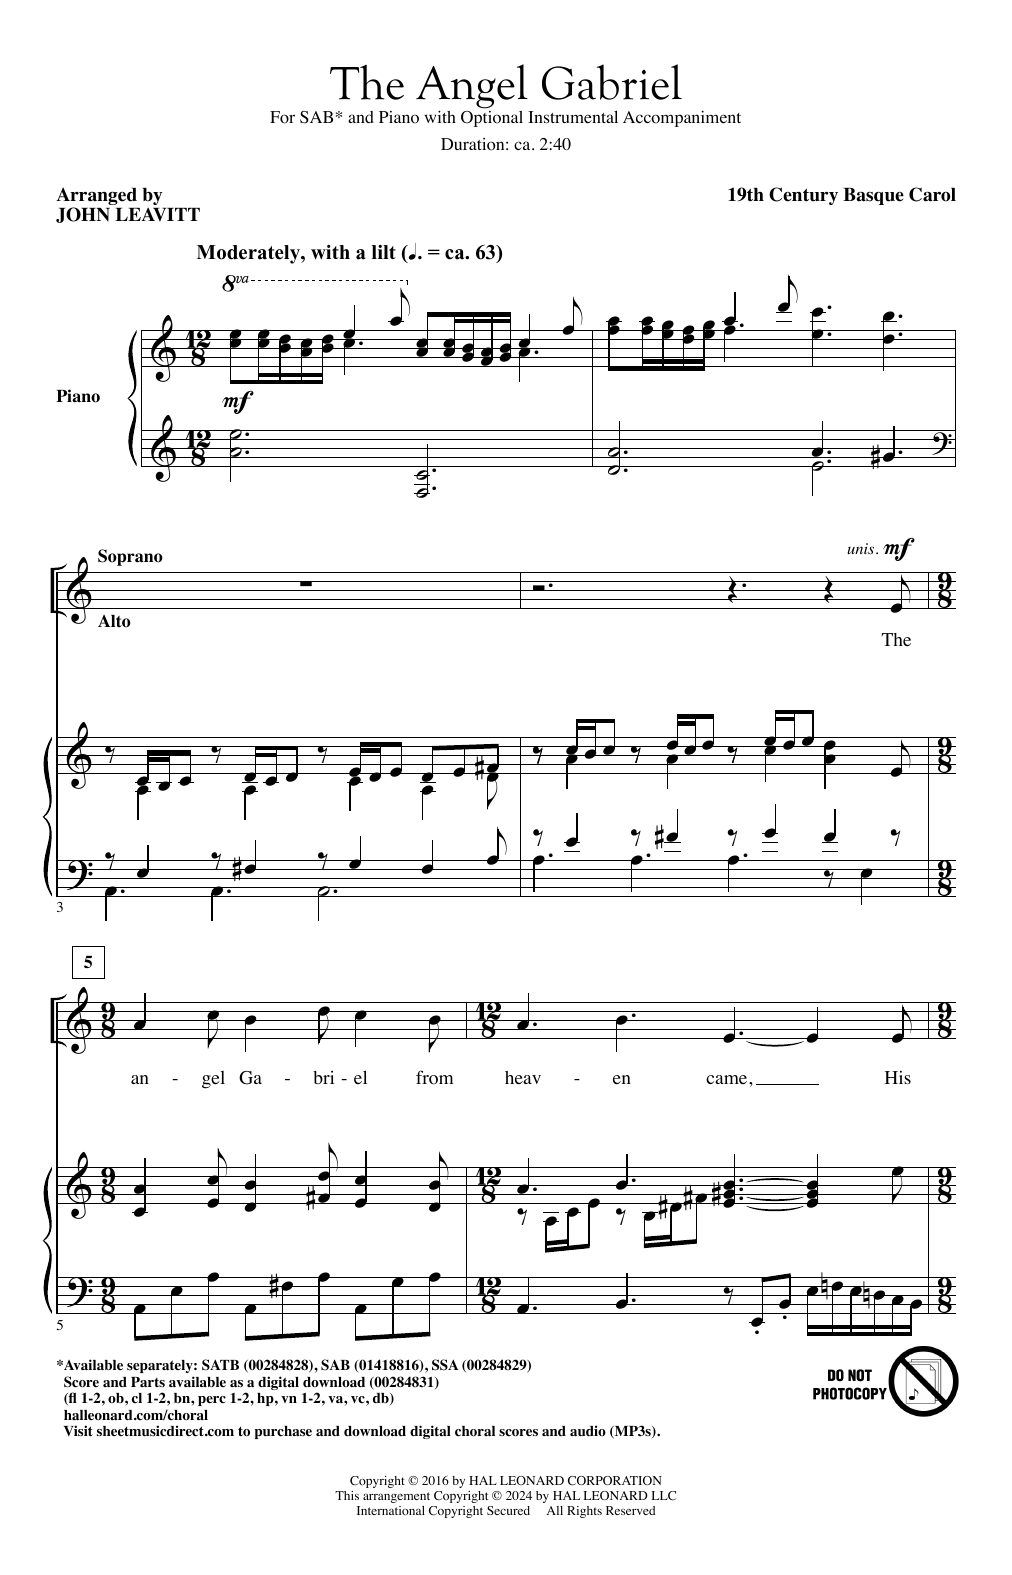 19th Century Basque Carol The Angel Gabriel (arr. John Leavitt) sheet music notes and chords arranged for SAB Choir